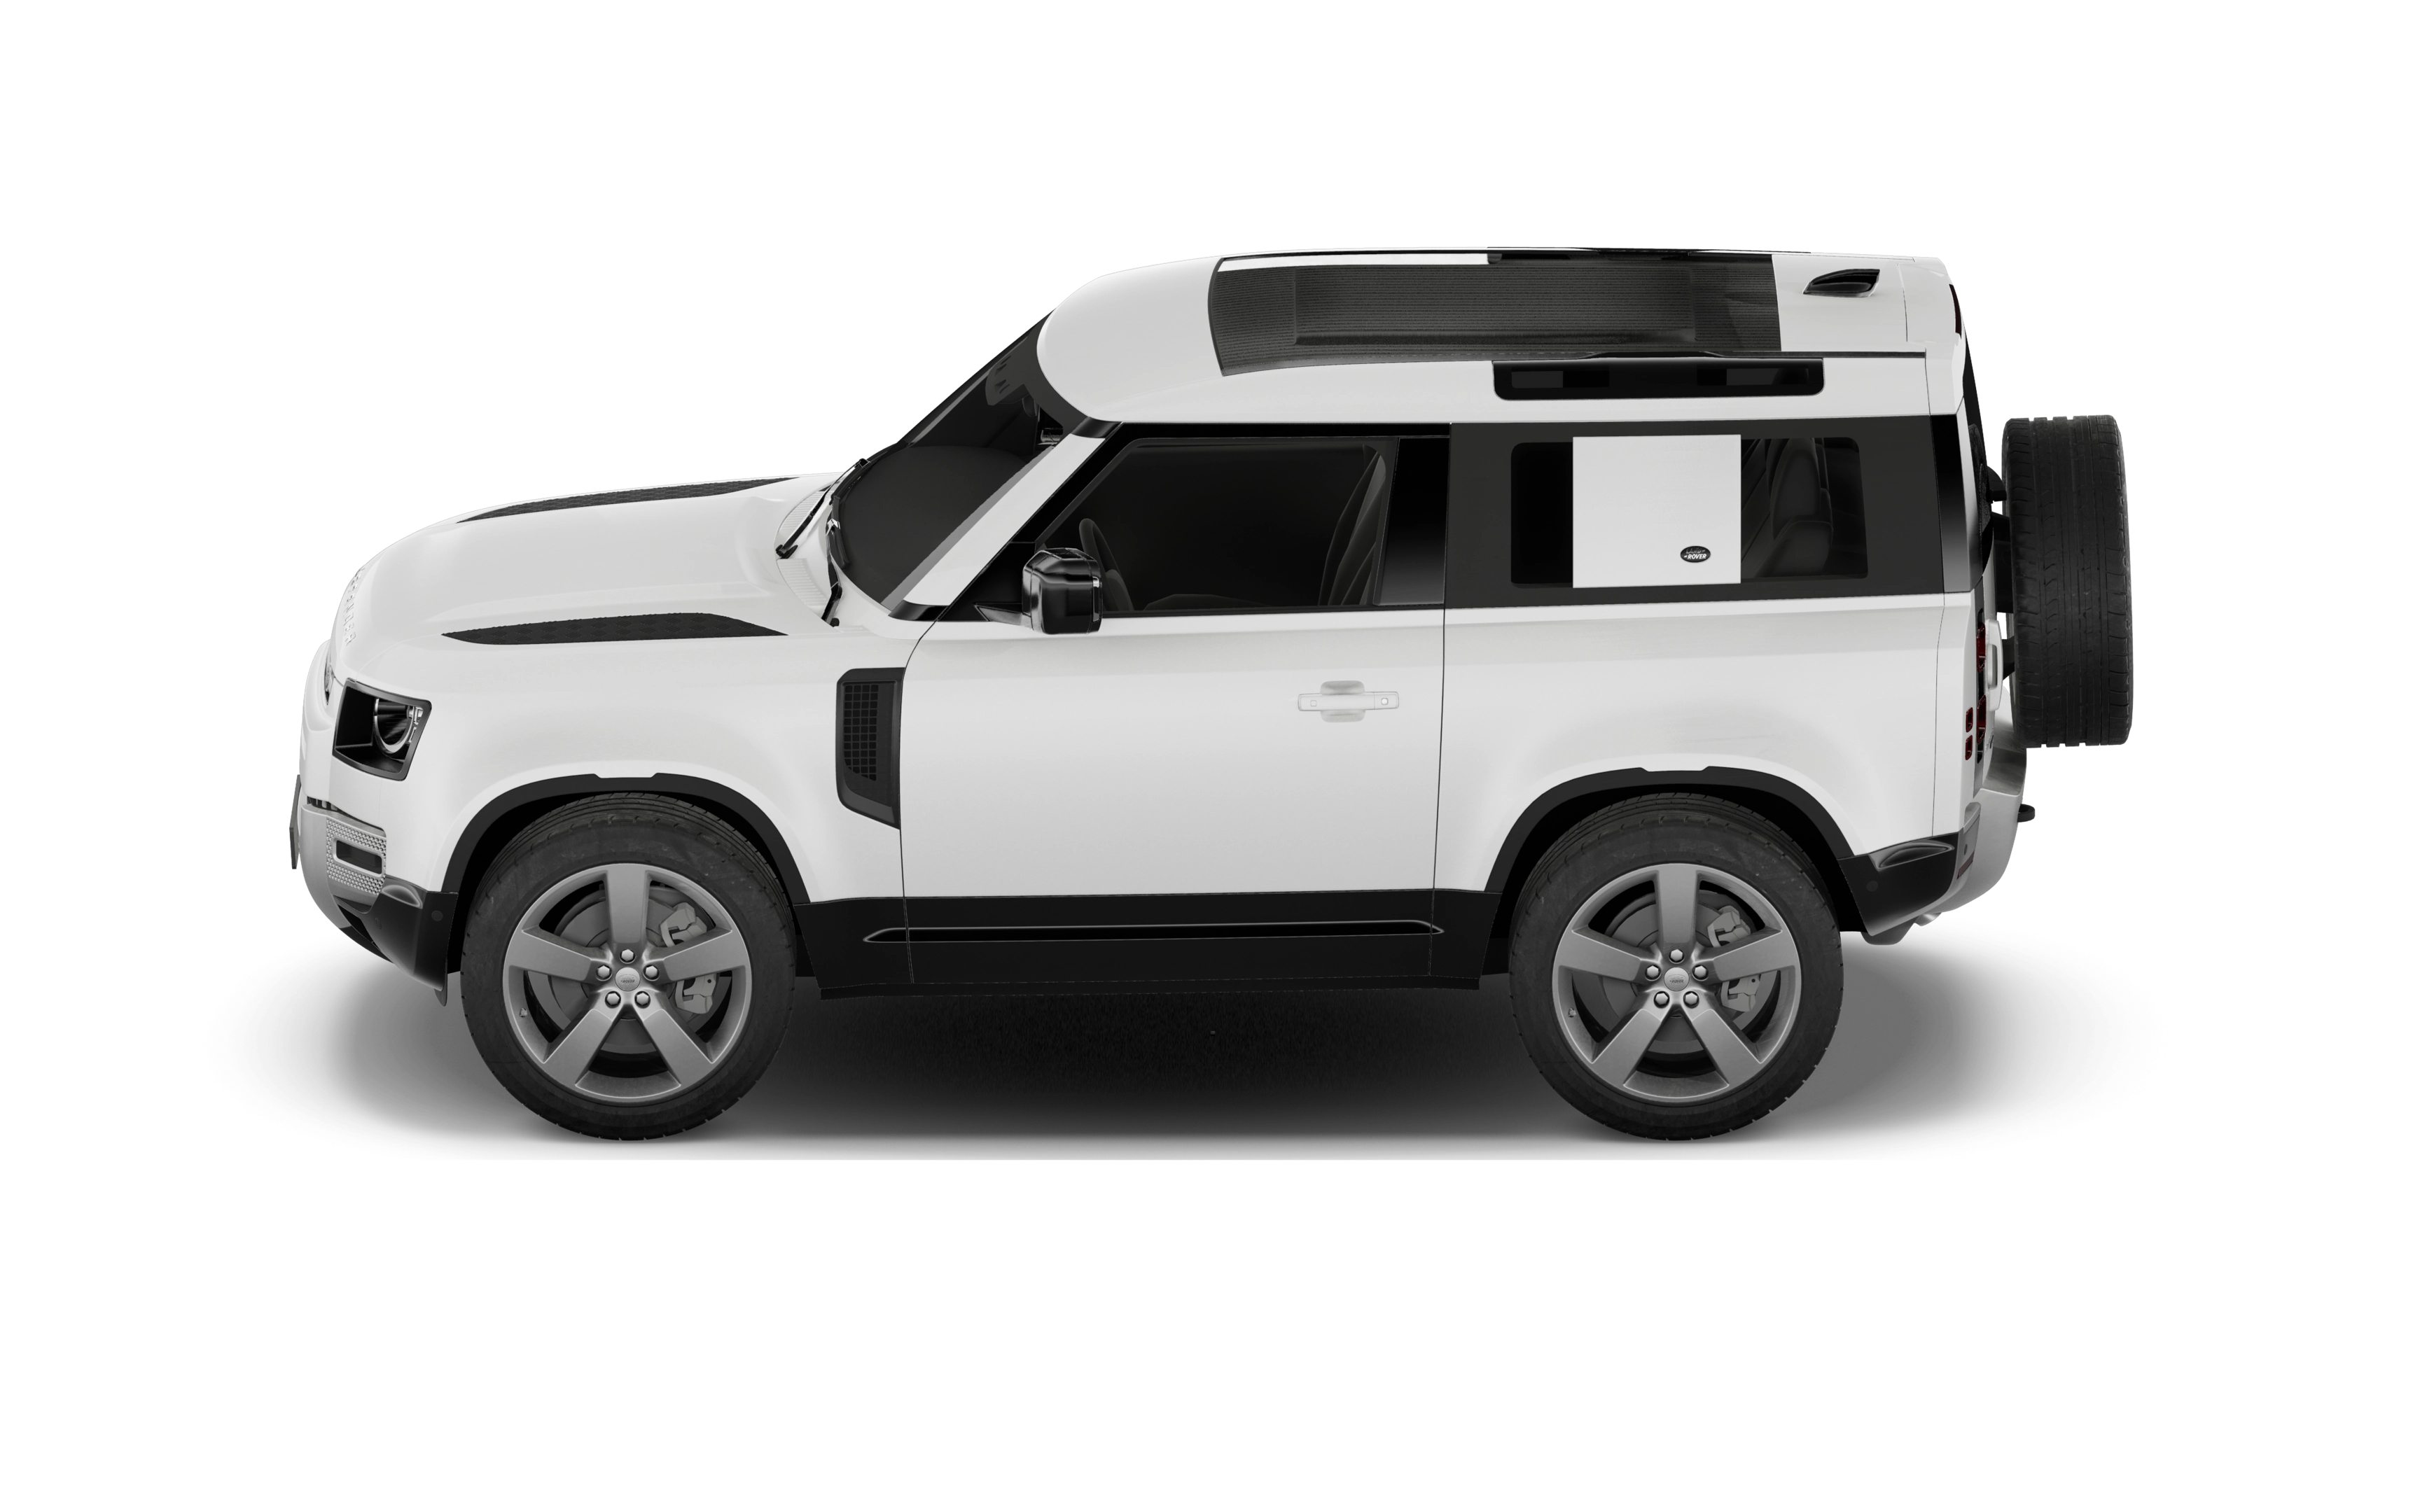 Land rover defender estate 3.0 d250 x-dynamic s 110 5 doors auto [6 seat]